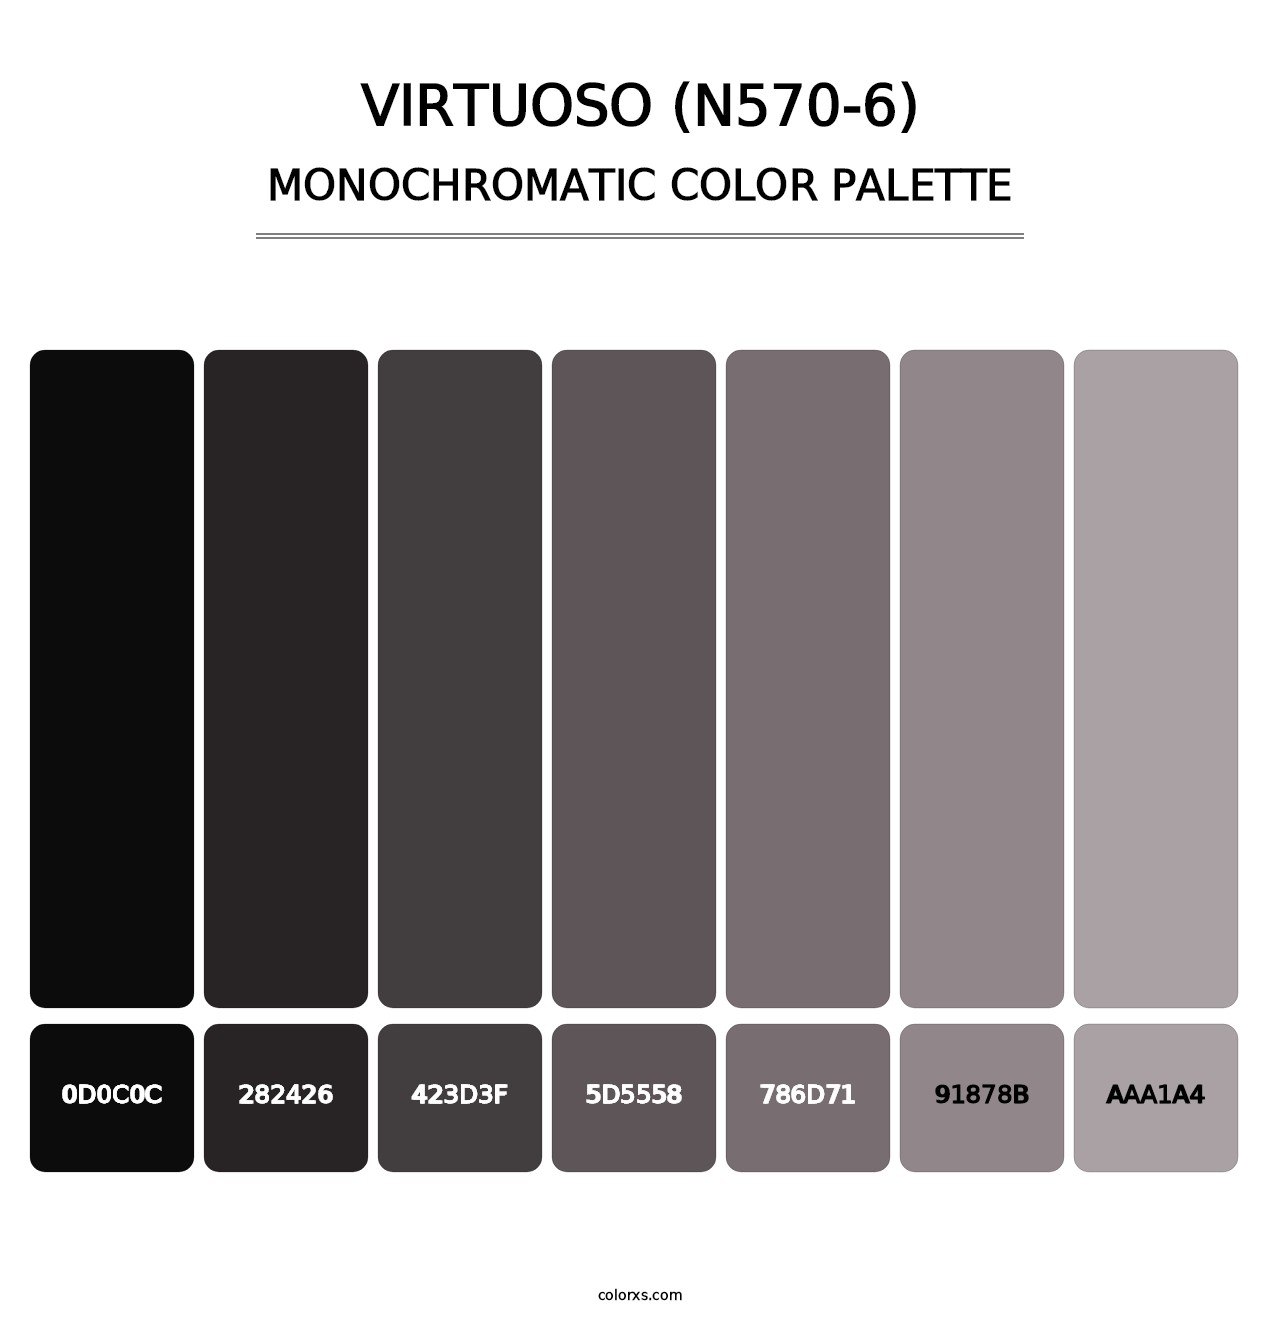 Virtuoso (N570-6) - Monochromatic Color Palette